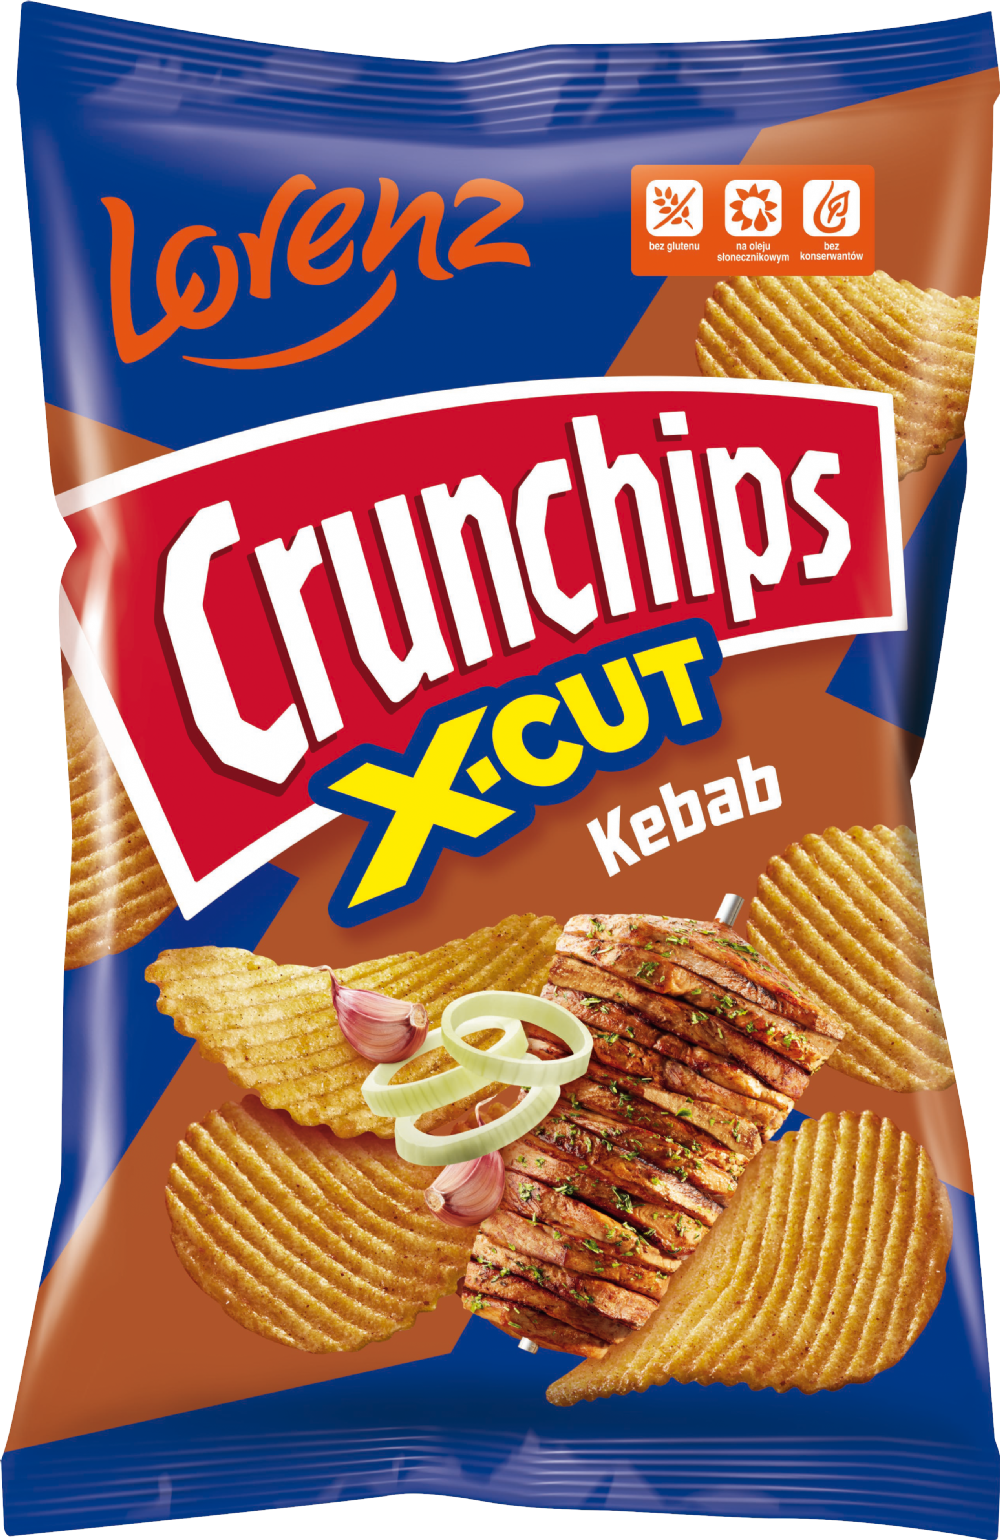 Crunchips - Kebab 140g